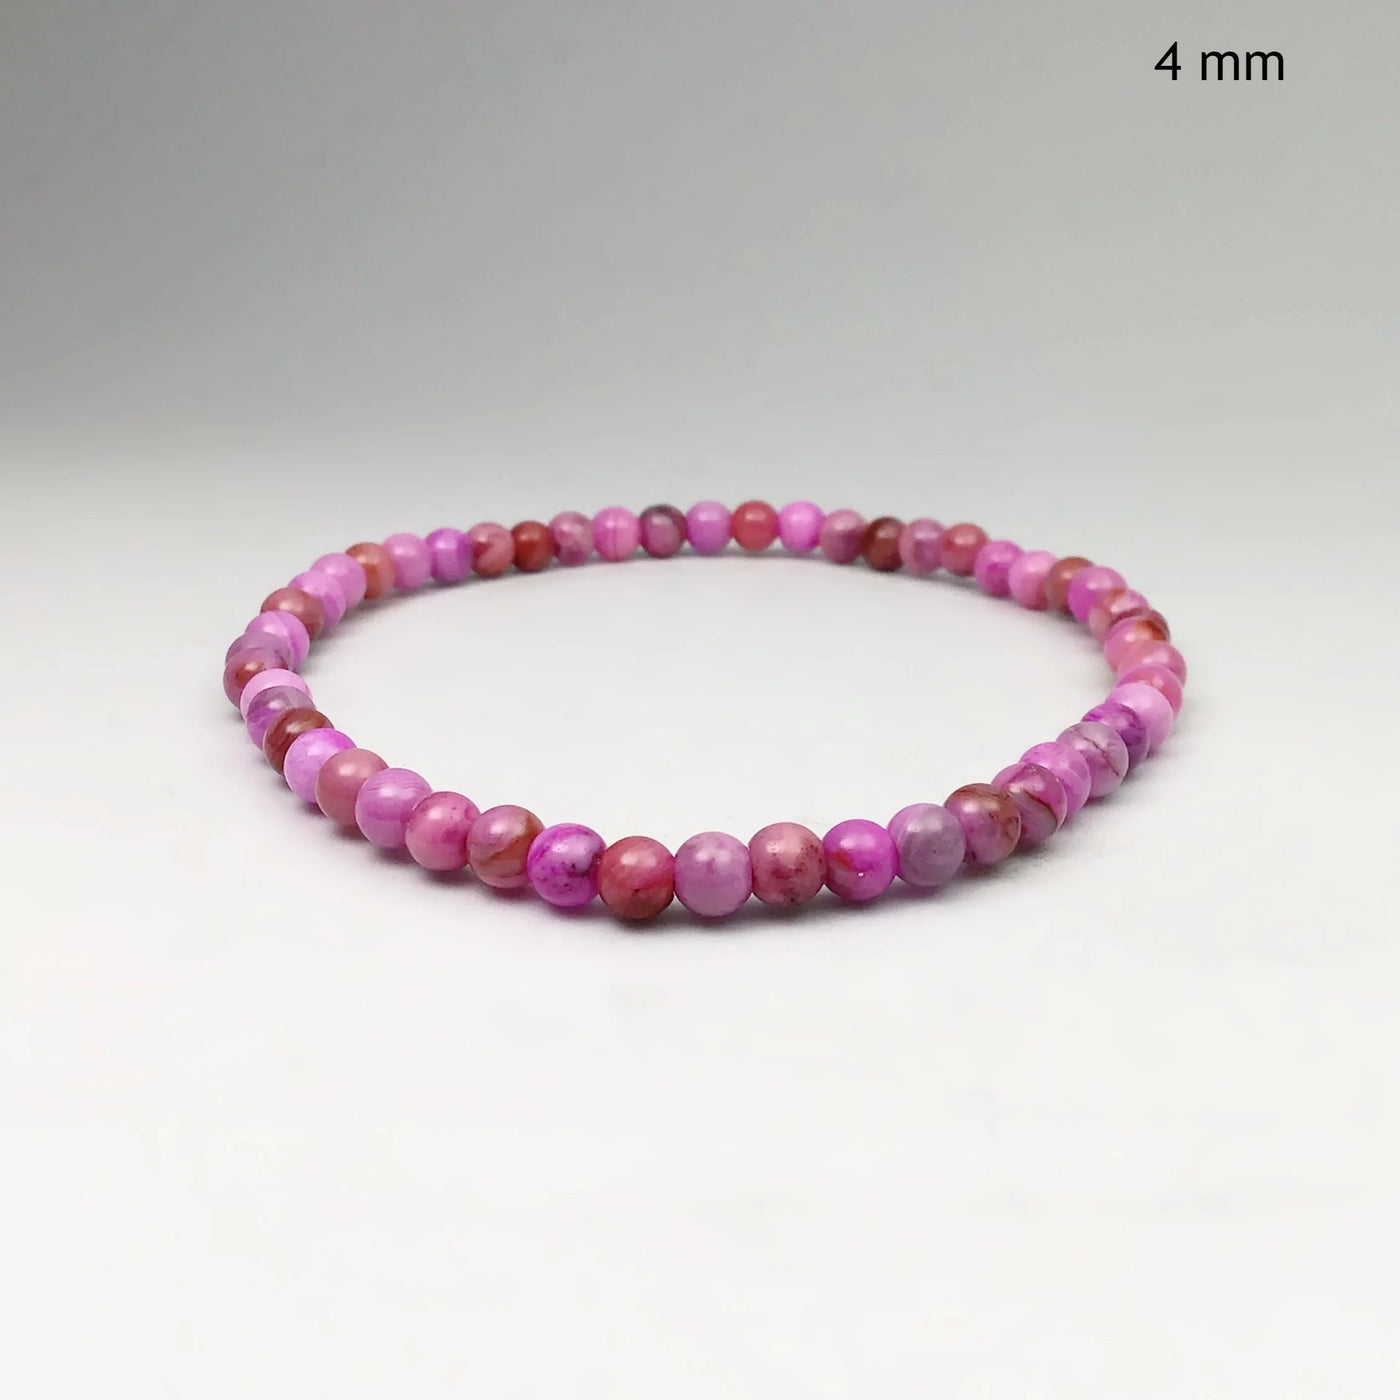 Pink Crazy Lace Agate Beaded Bracelet